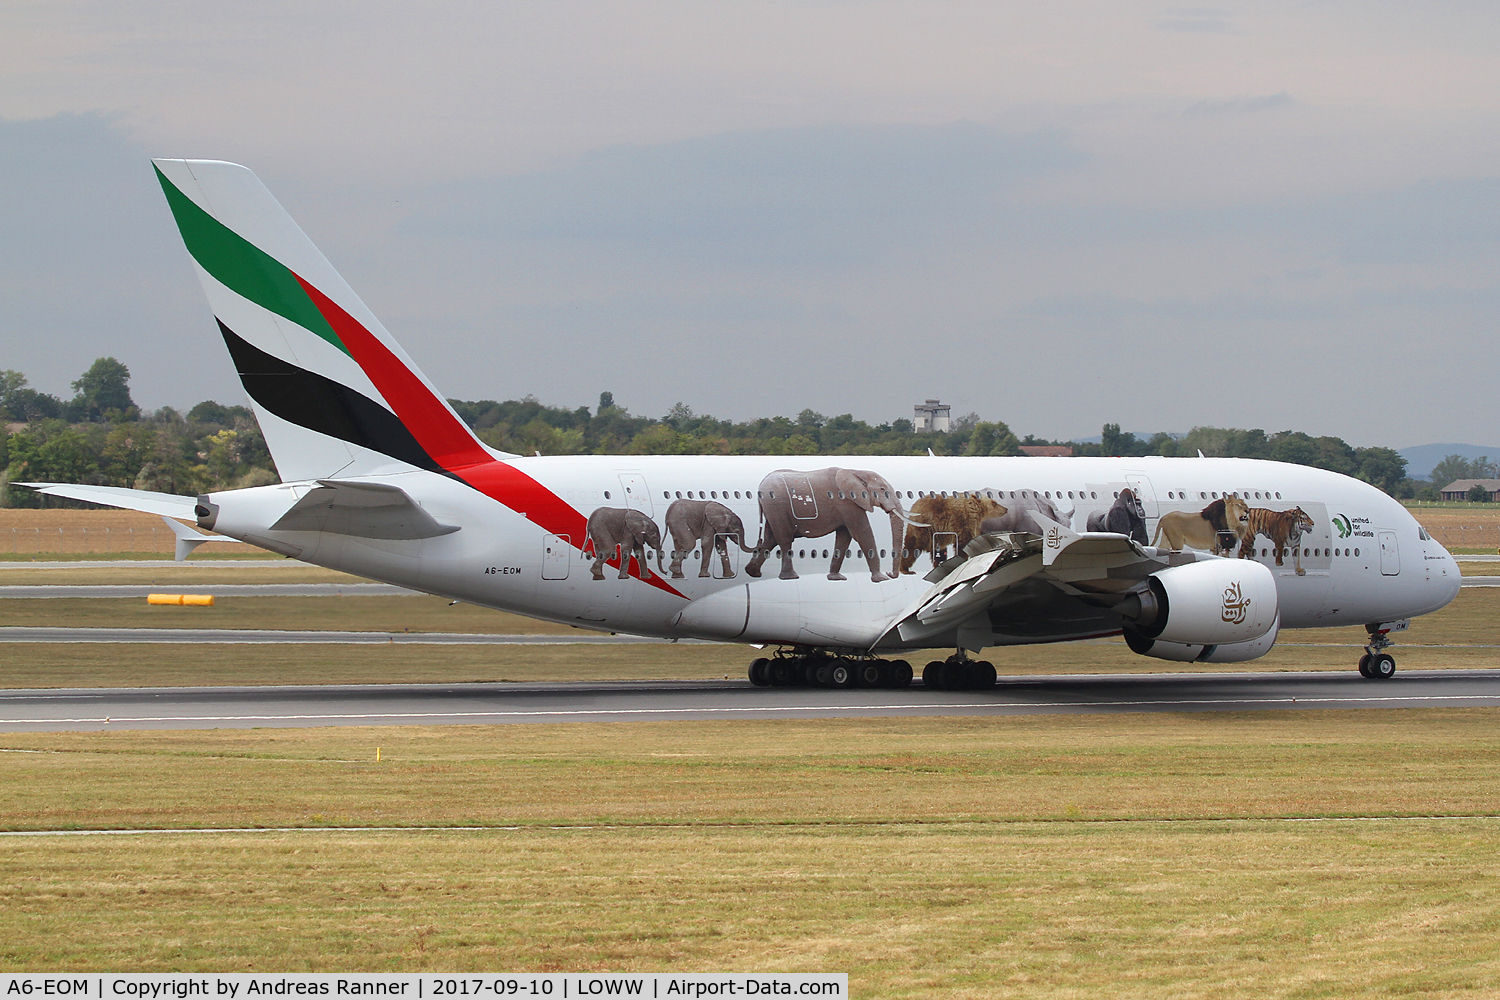 A6-EOM, 2015 Airbus A380-861 C/N 187, Emirates A380